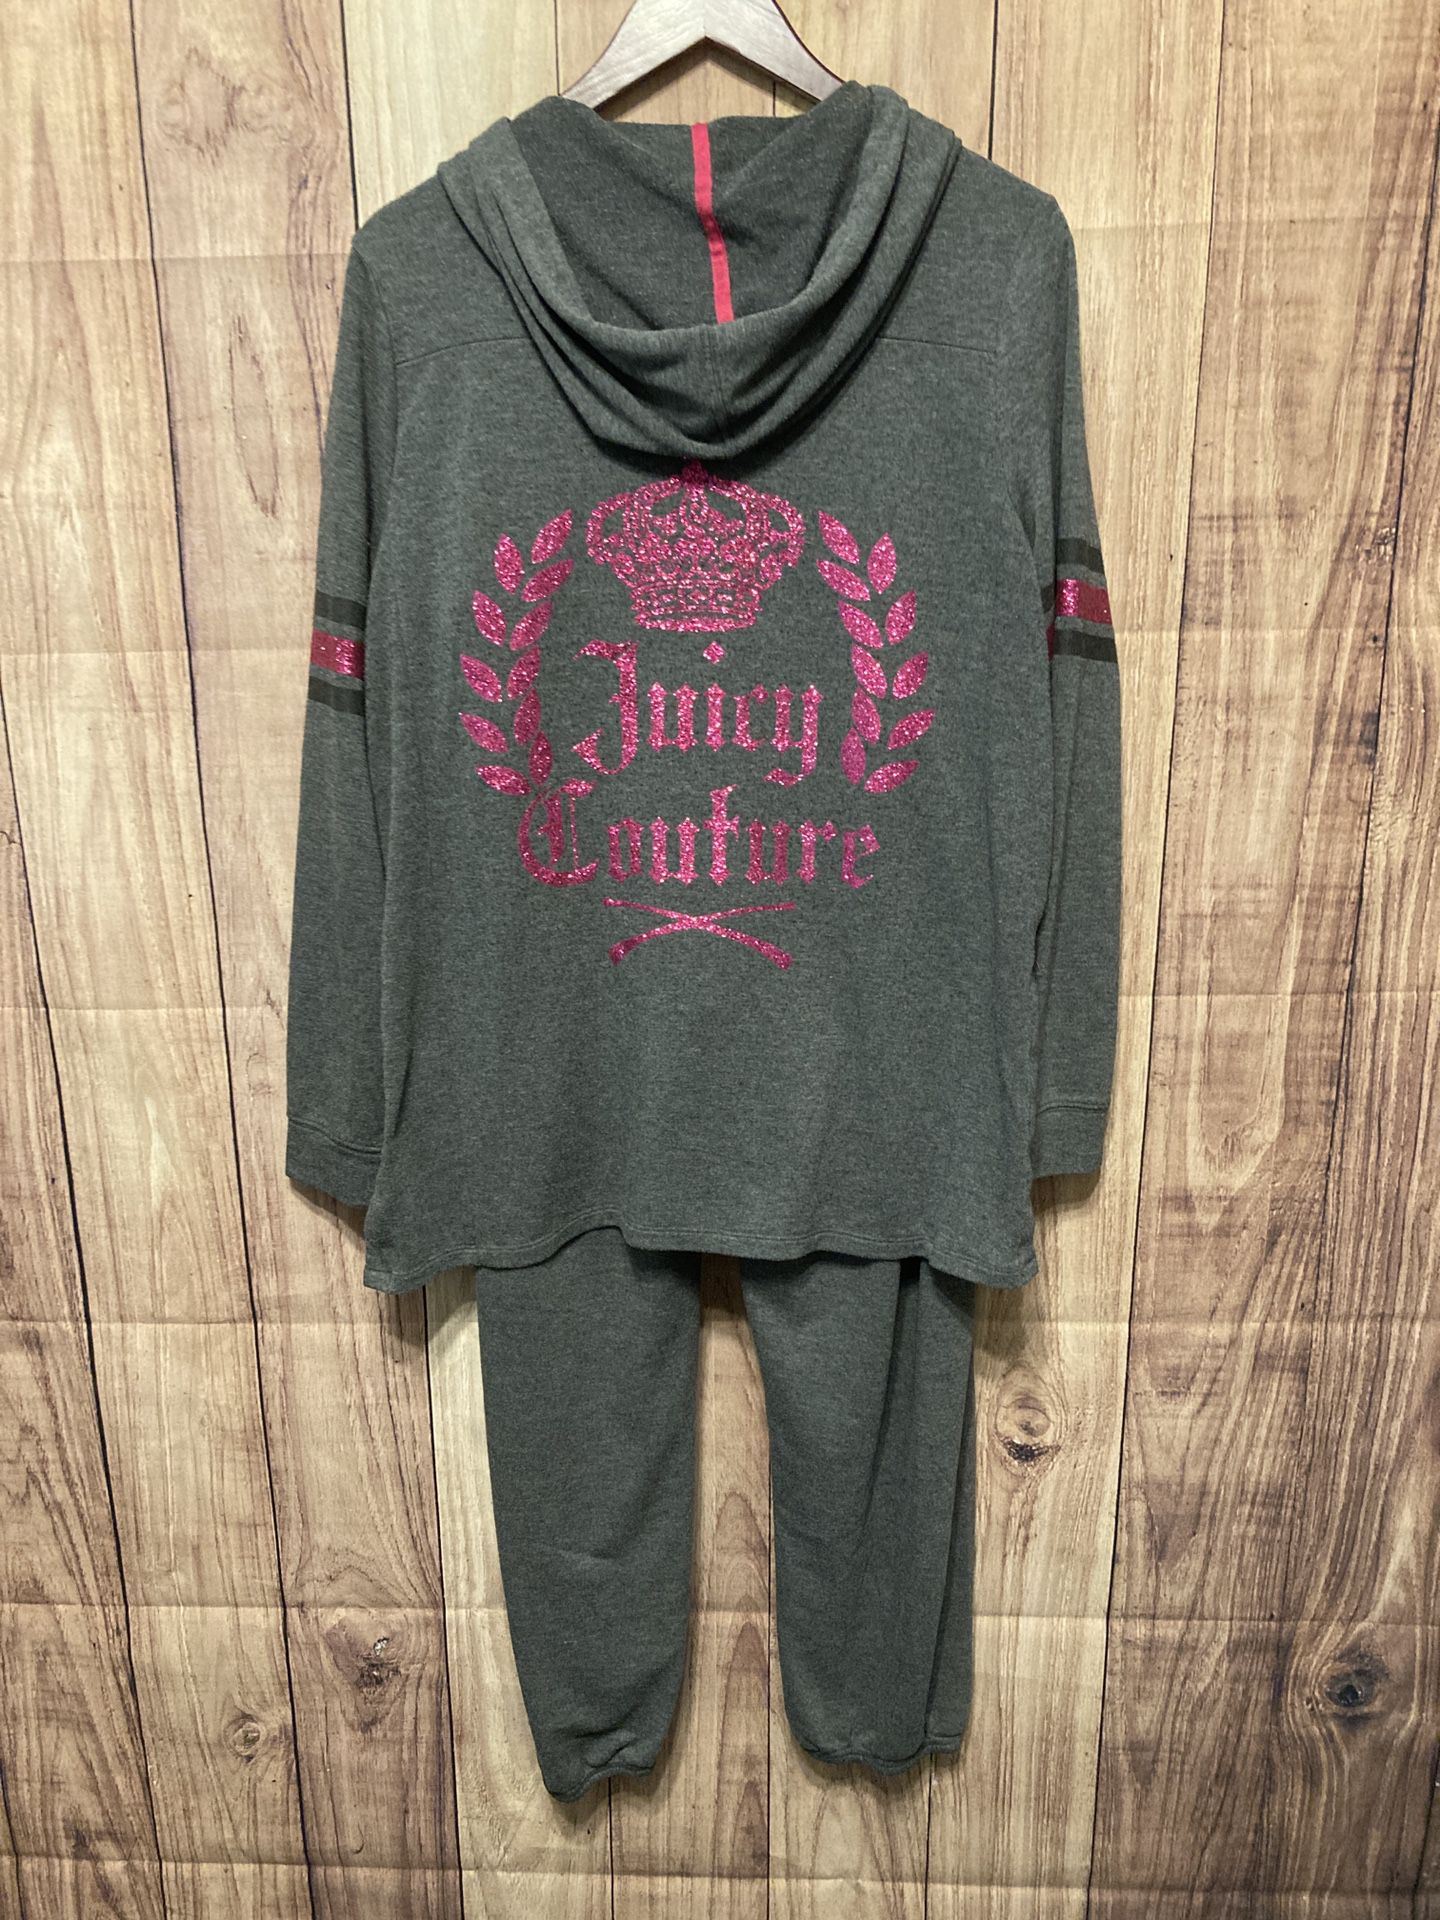 Juicy Couture XL grey pink women’s sweat track suit lounge pants zip up hoodie